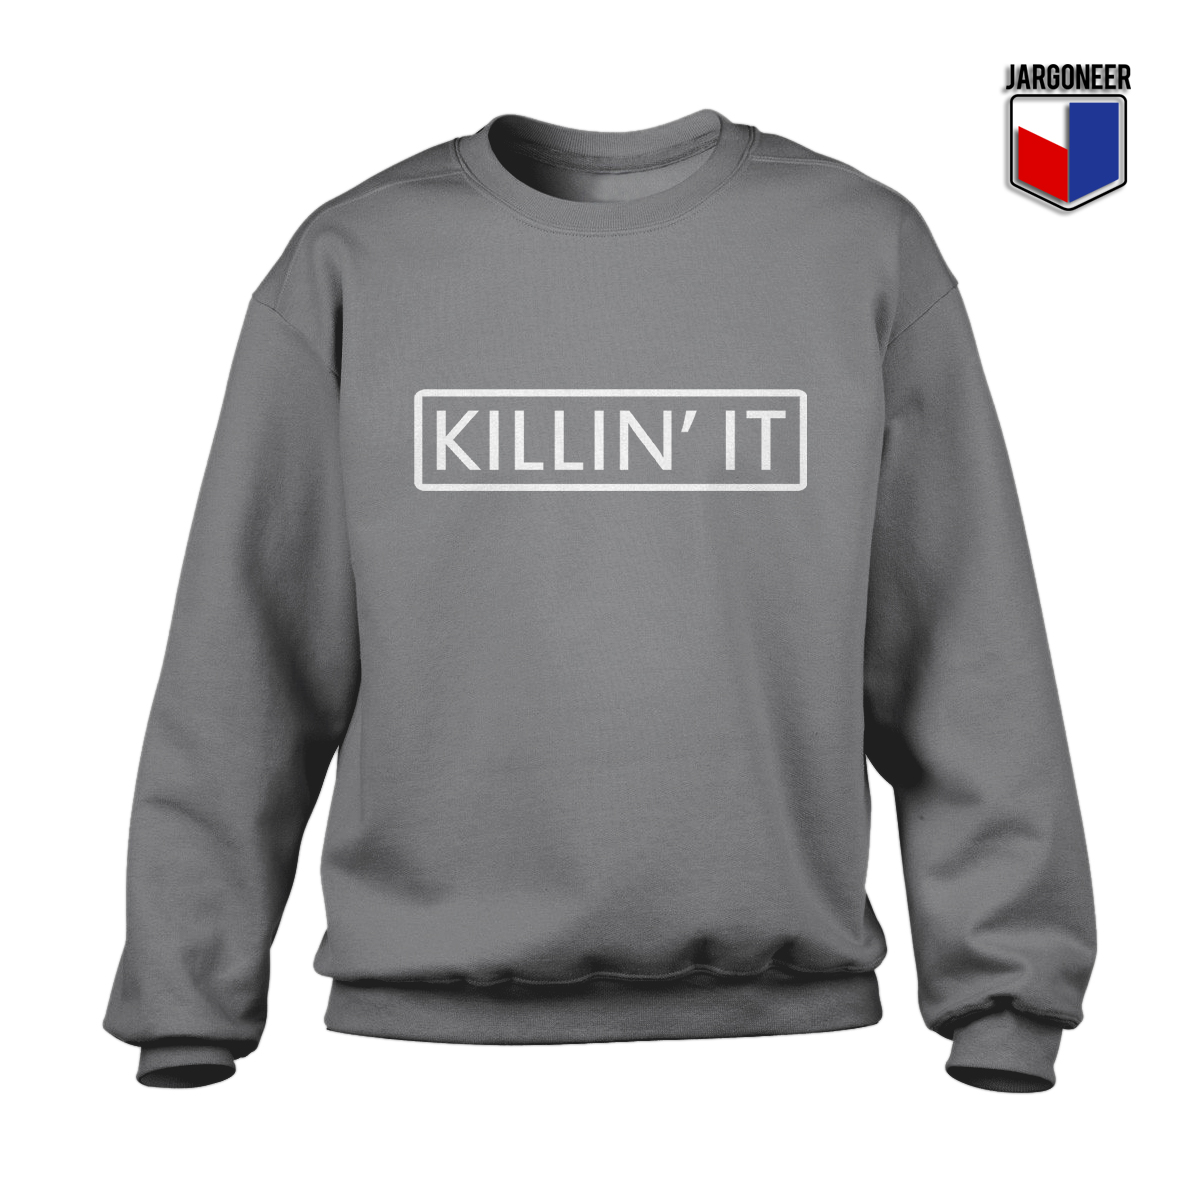 Killin it grey sweetshirt - Shop Unique Graphic Cool Shirt Designs